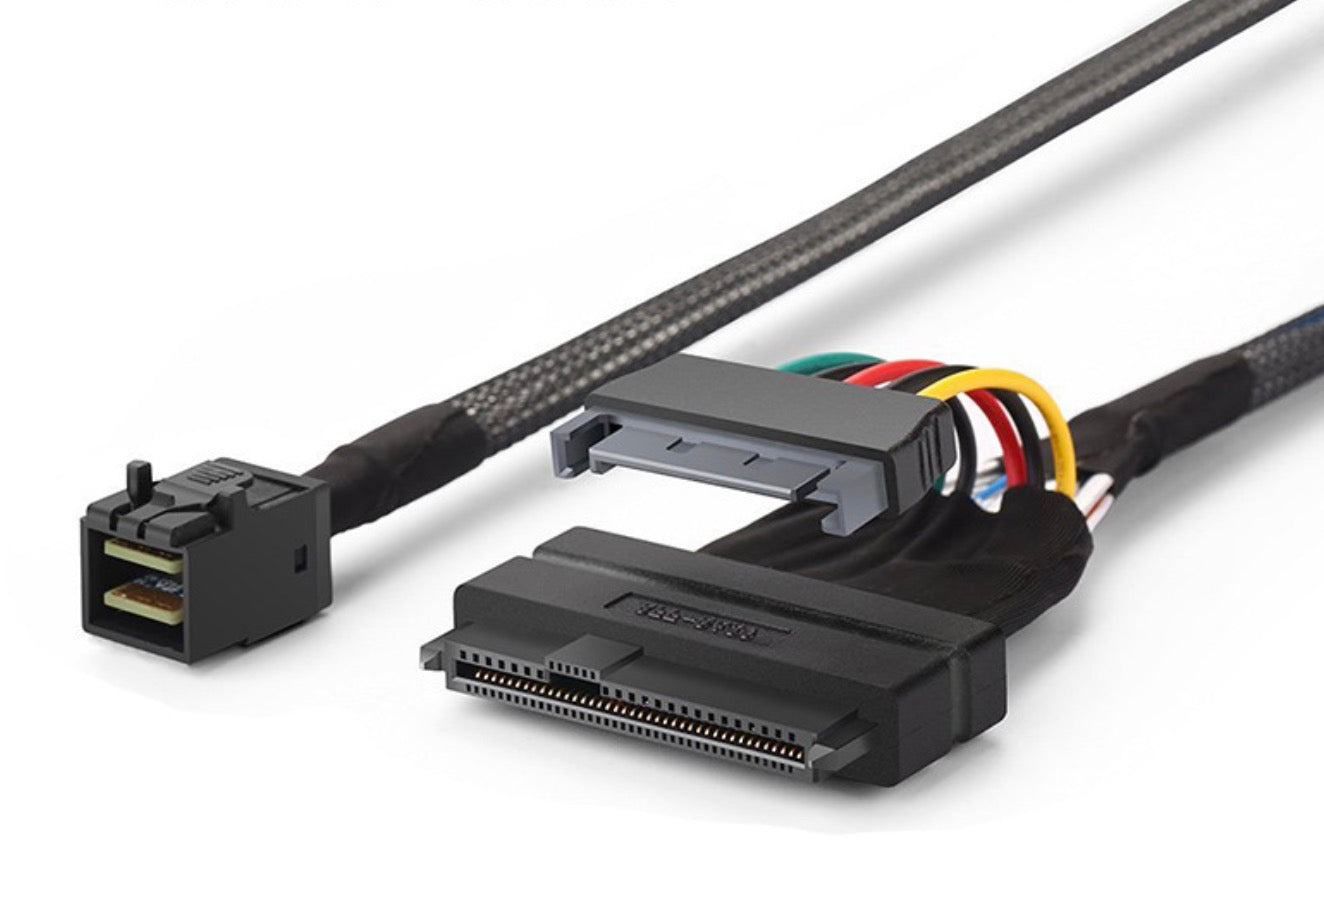 Mini SAS SFF-8643 to U.2 SFF-8639 U2 NVME SSD Data Cable 12Gbps 0.8m